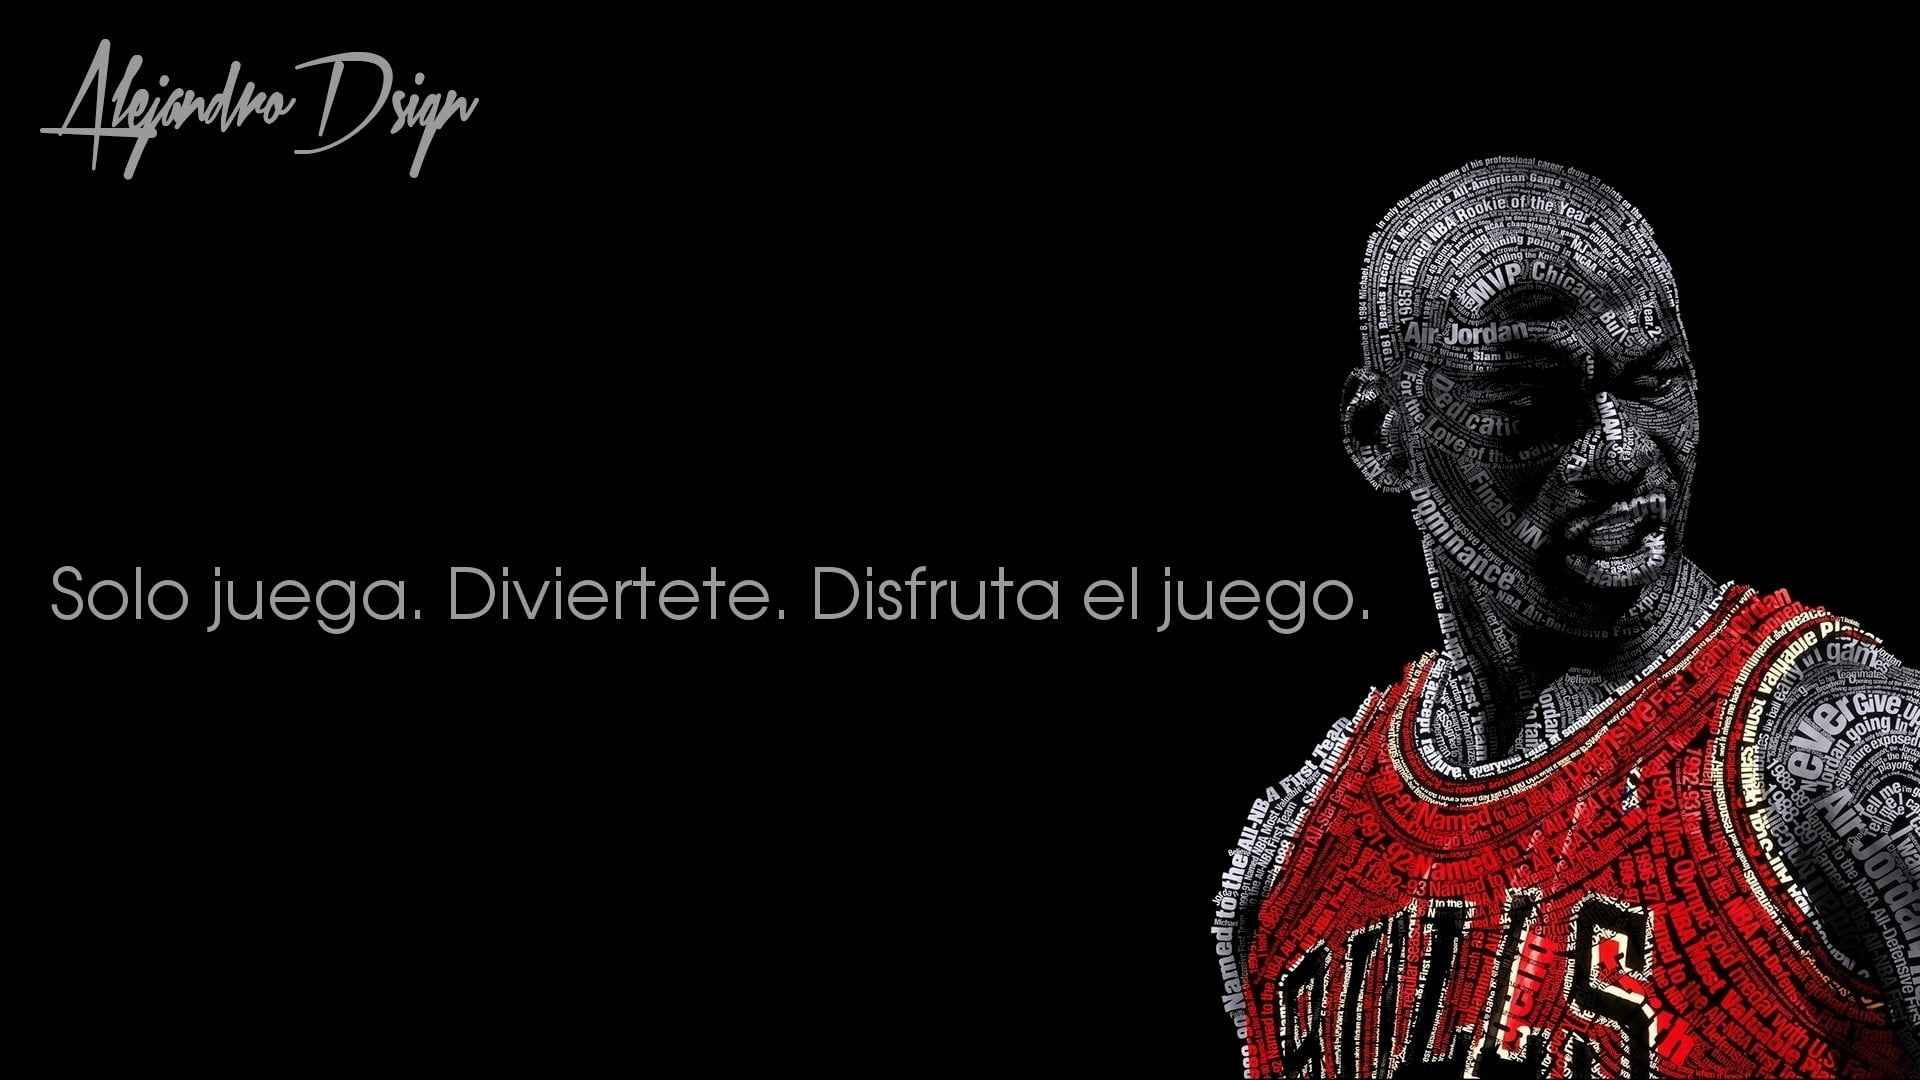 Michael Jordan, typographic portraits, Chicago Bulls, basketball